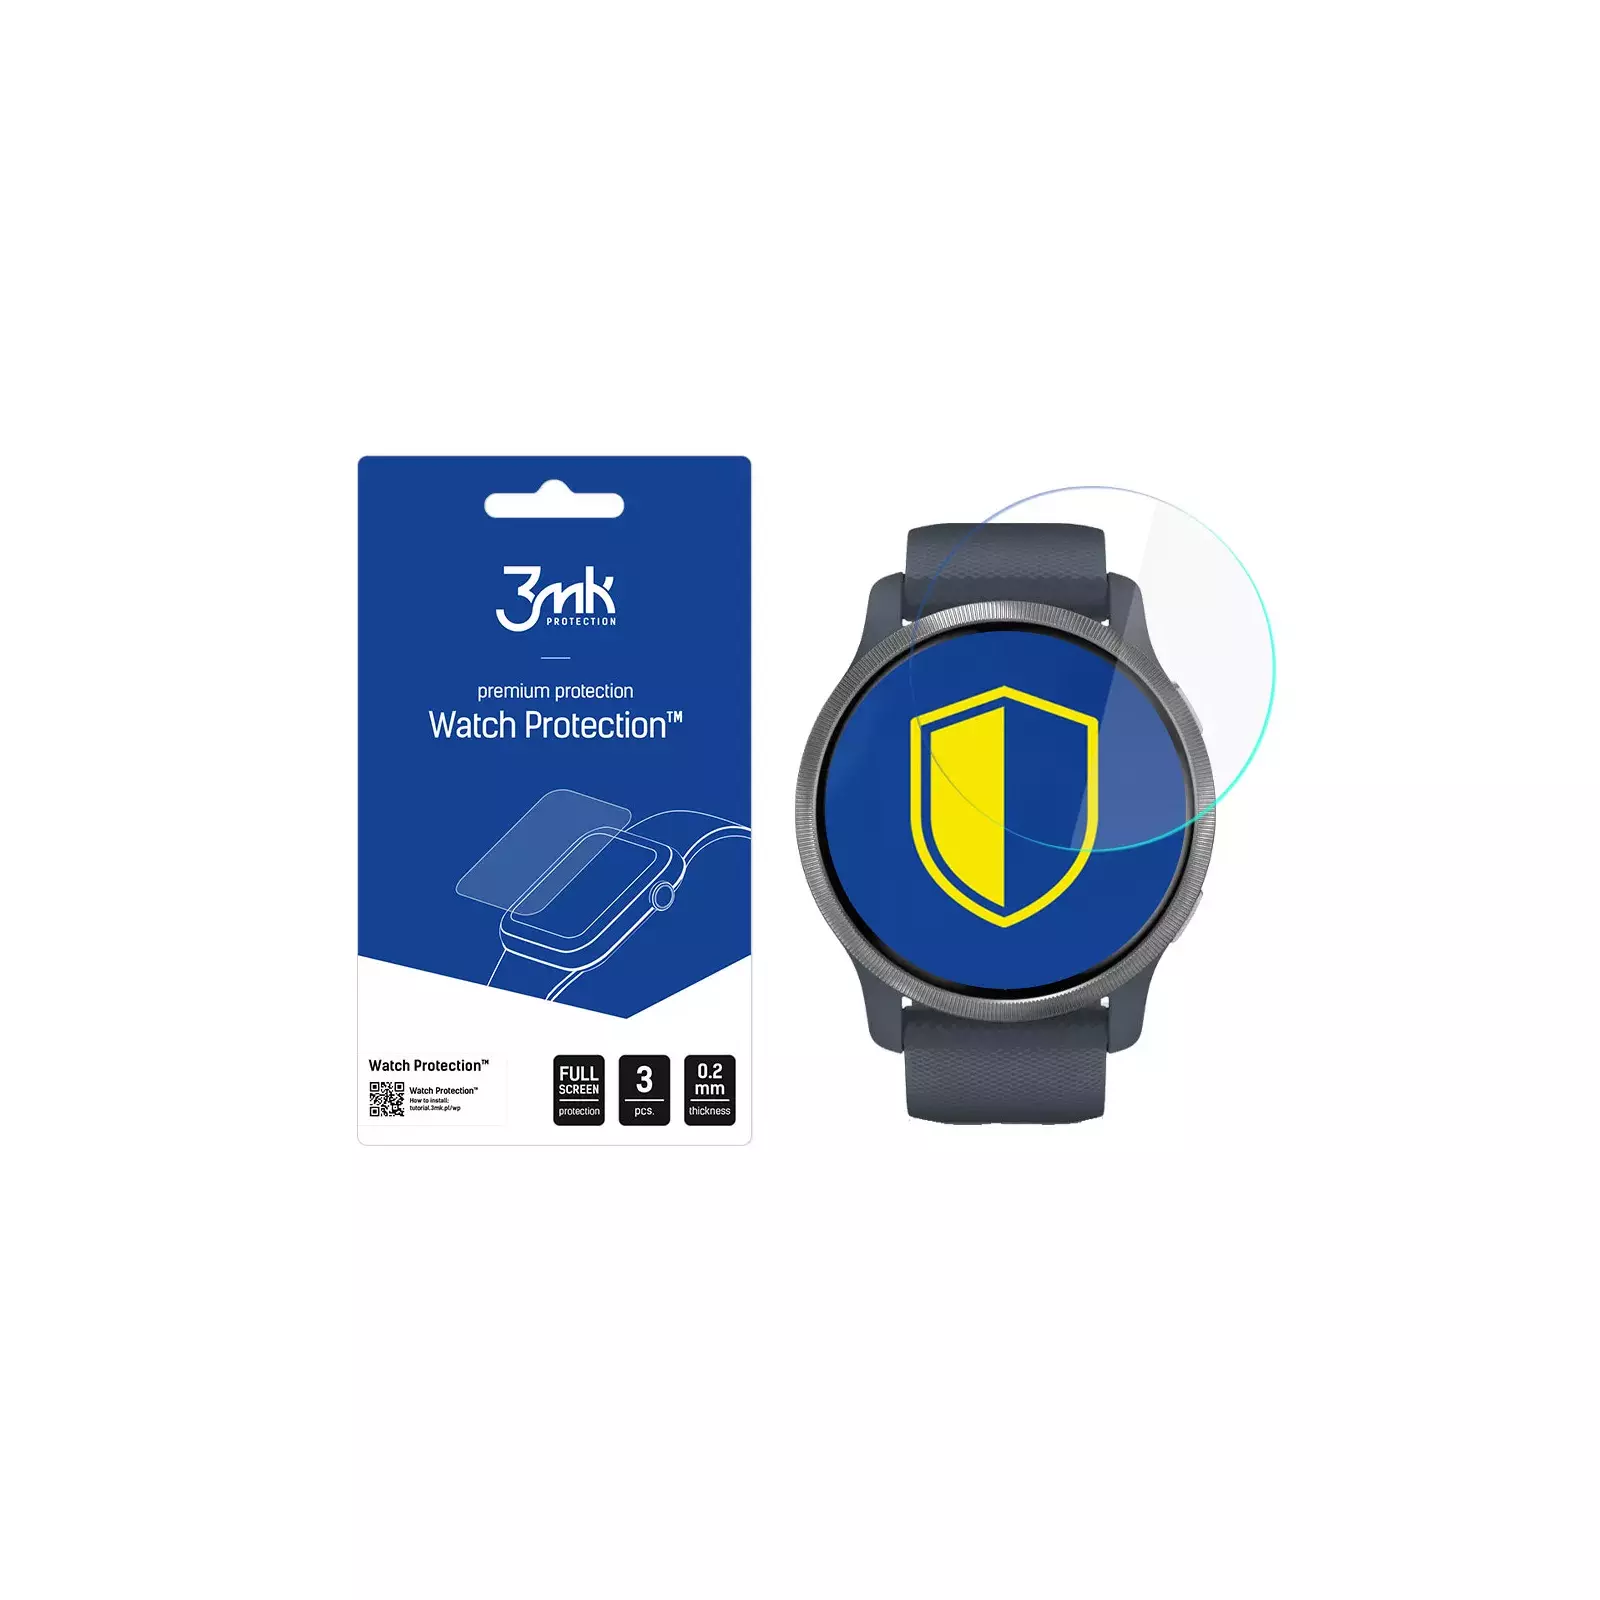 Garmin Venu 2 - 3mk 3mk Watch ARC(93), Screen protect